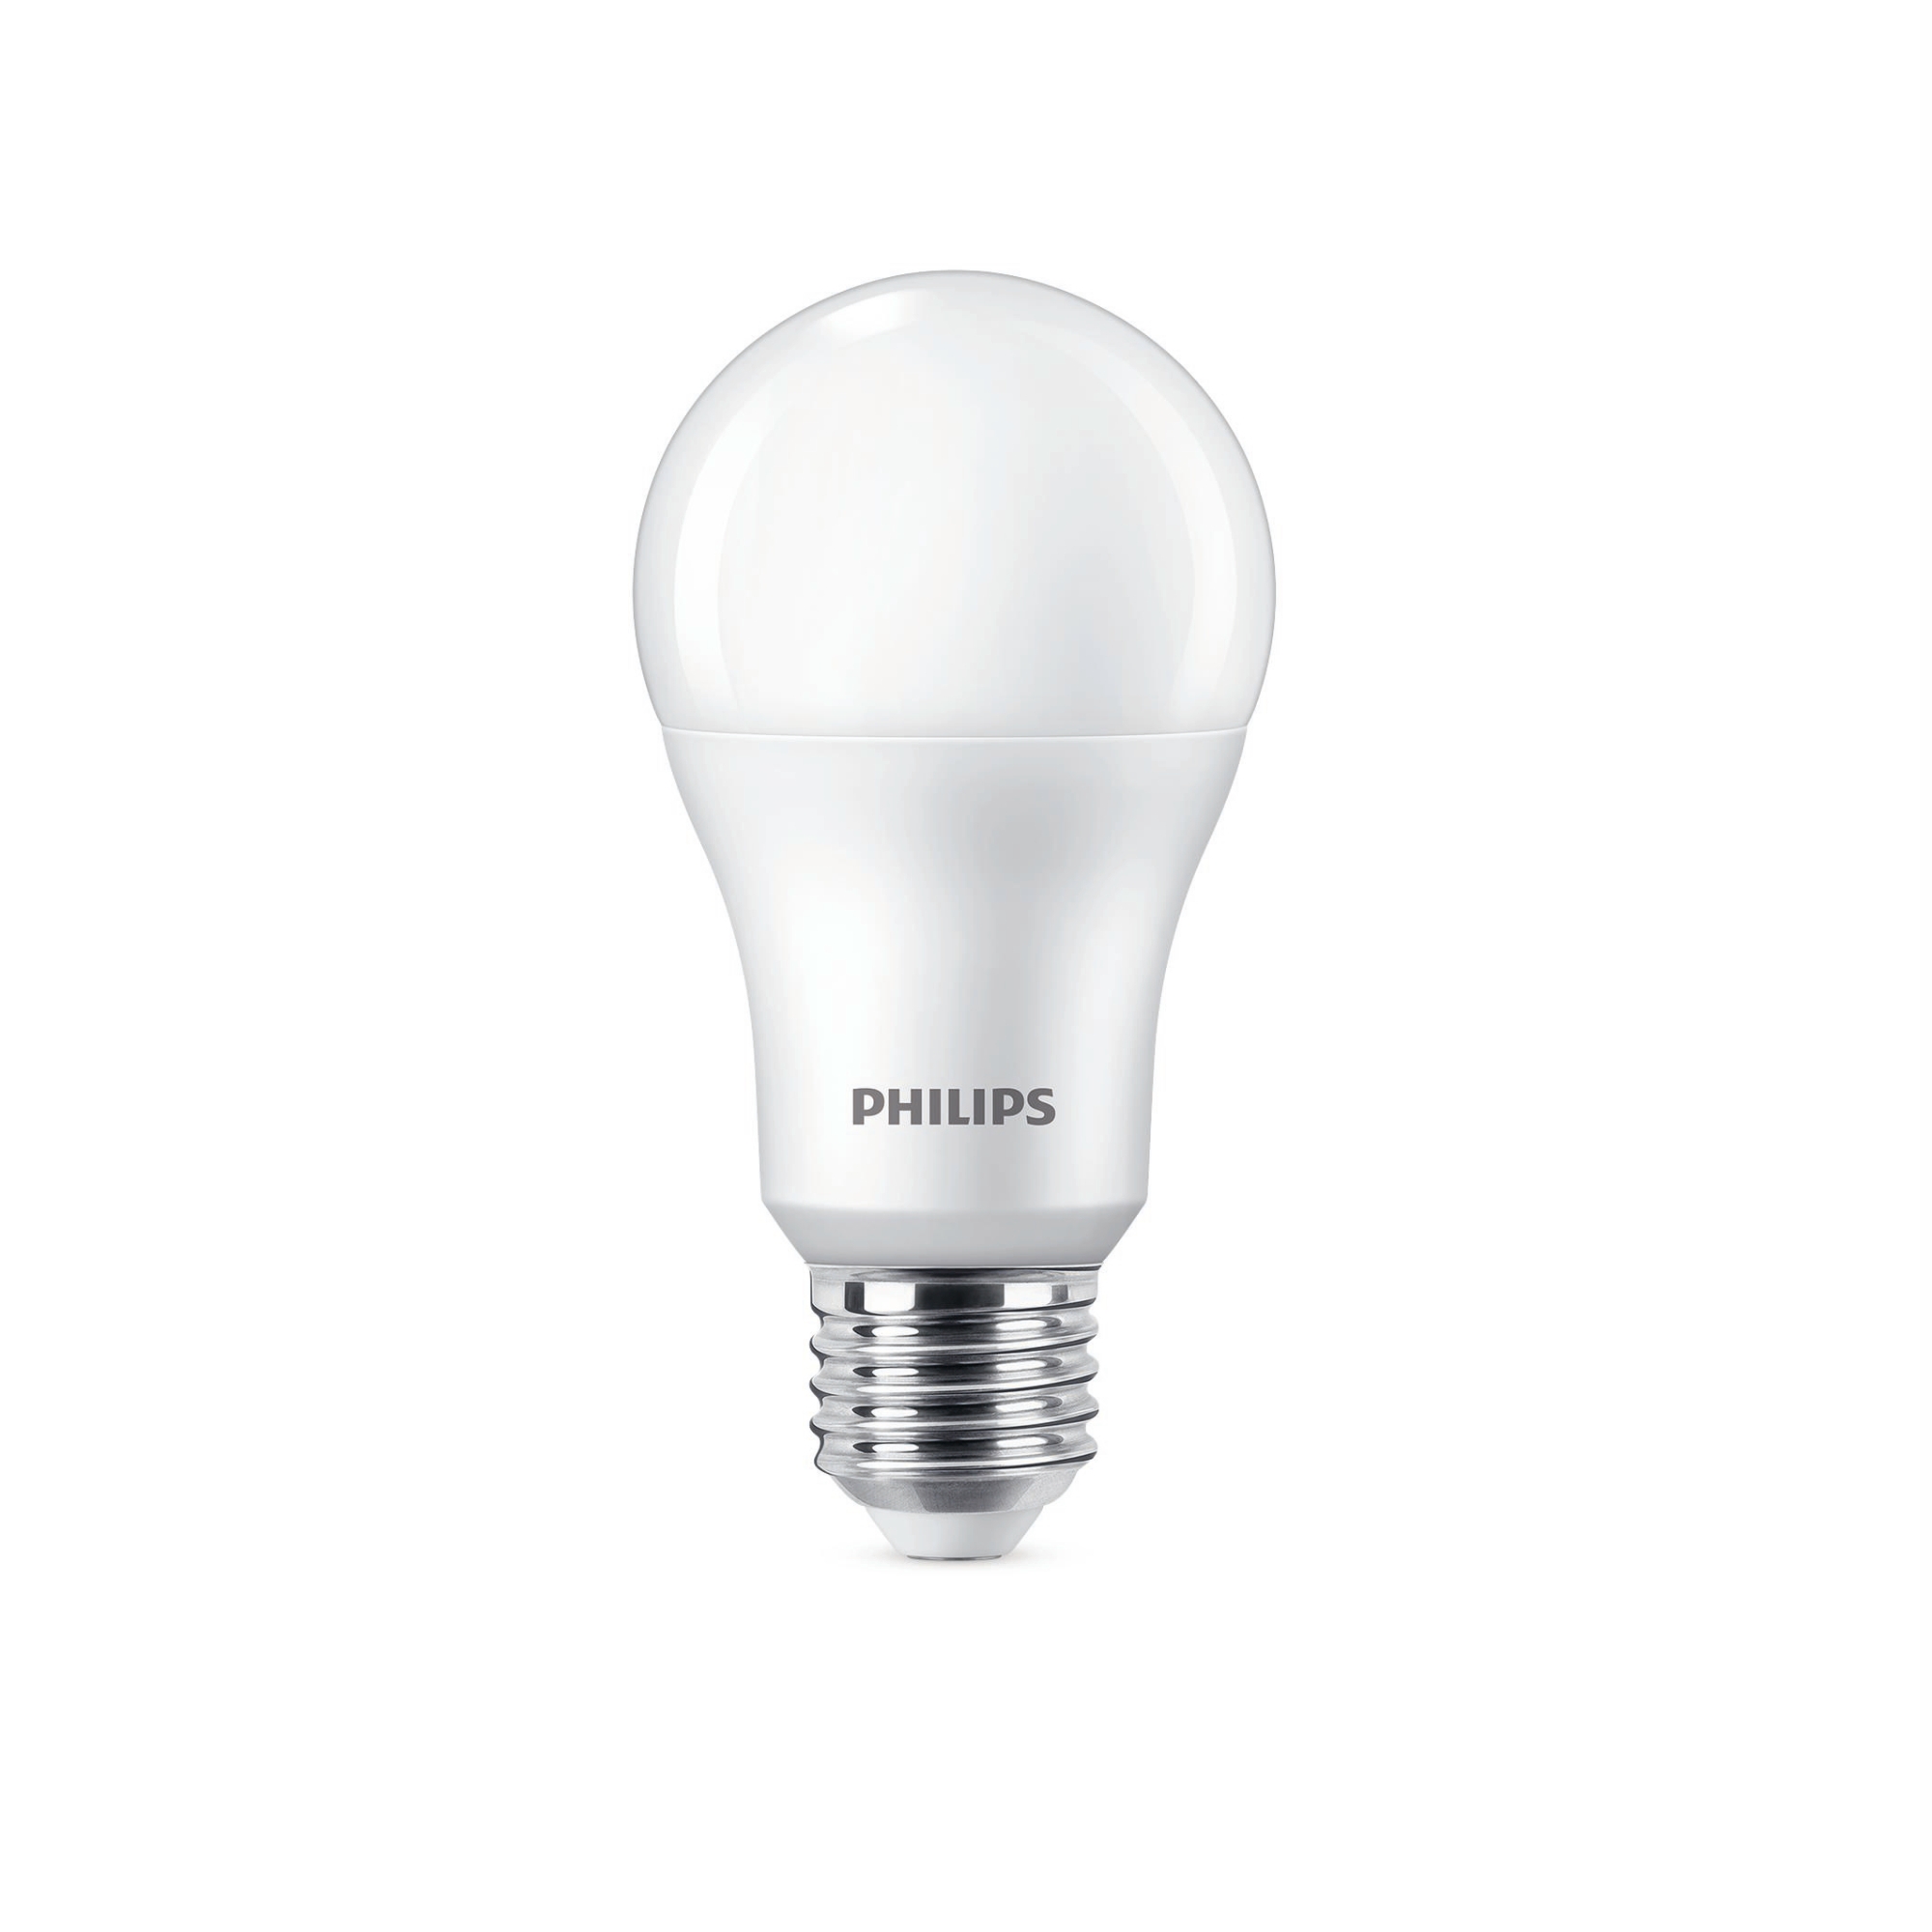 Bec LED Philips clasic A67 E27 13W 1521lm lumina rece 6500 K, set 3 bucati